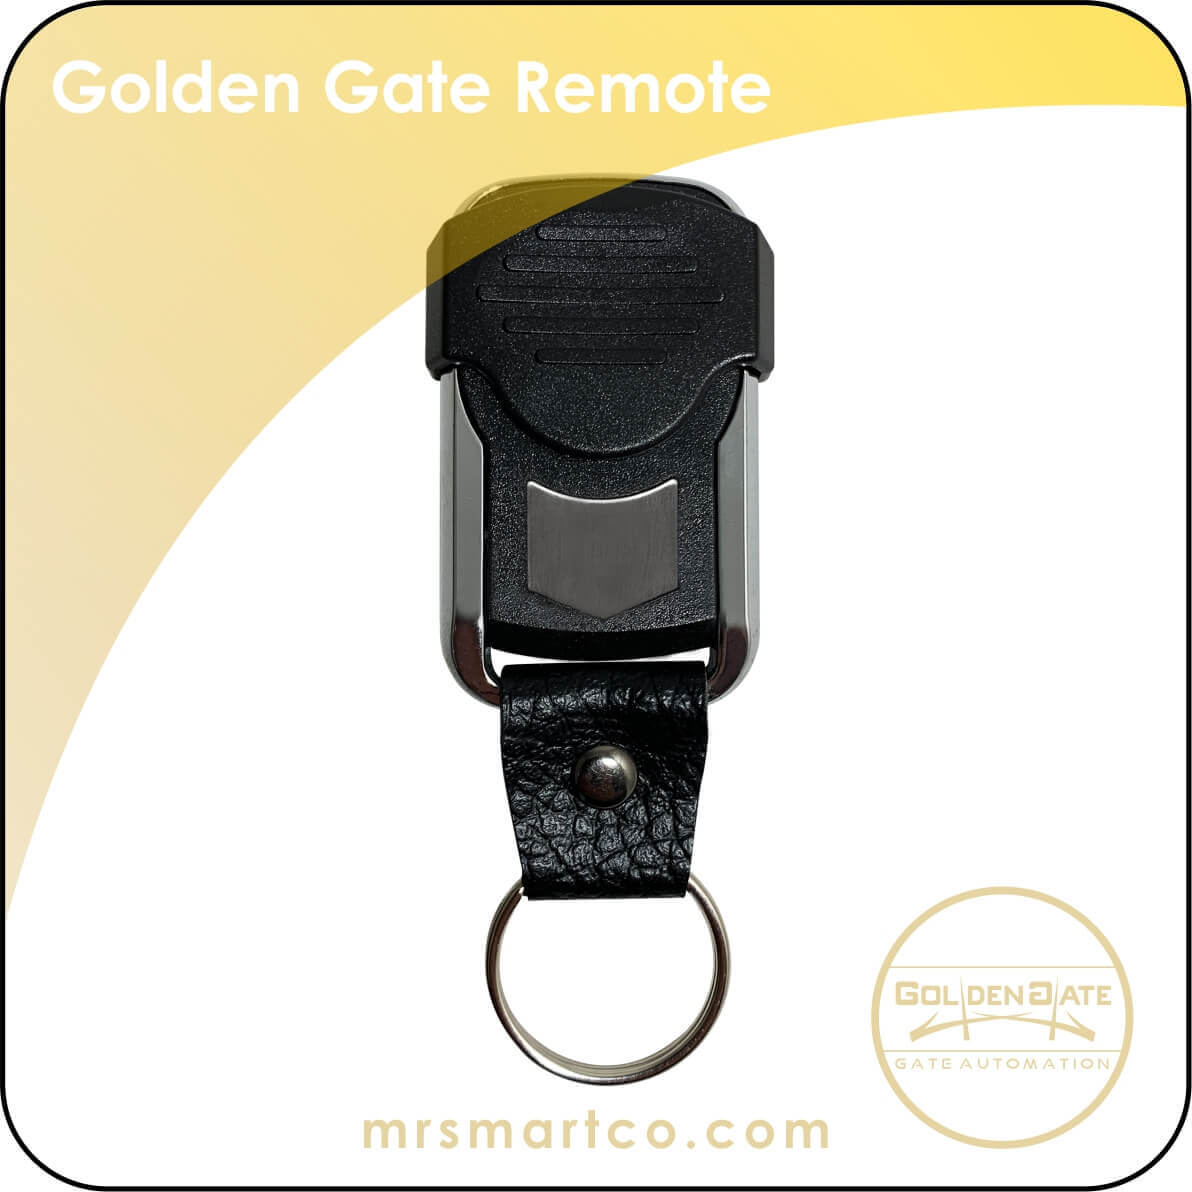 golden gate remote 207